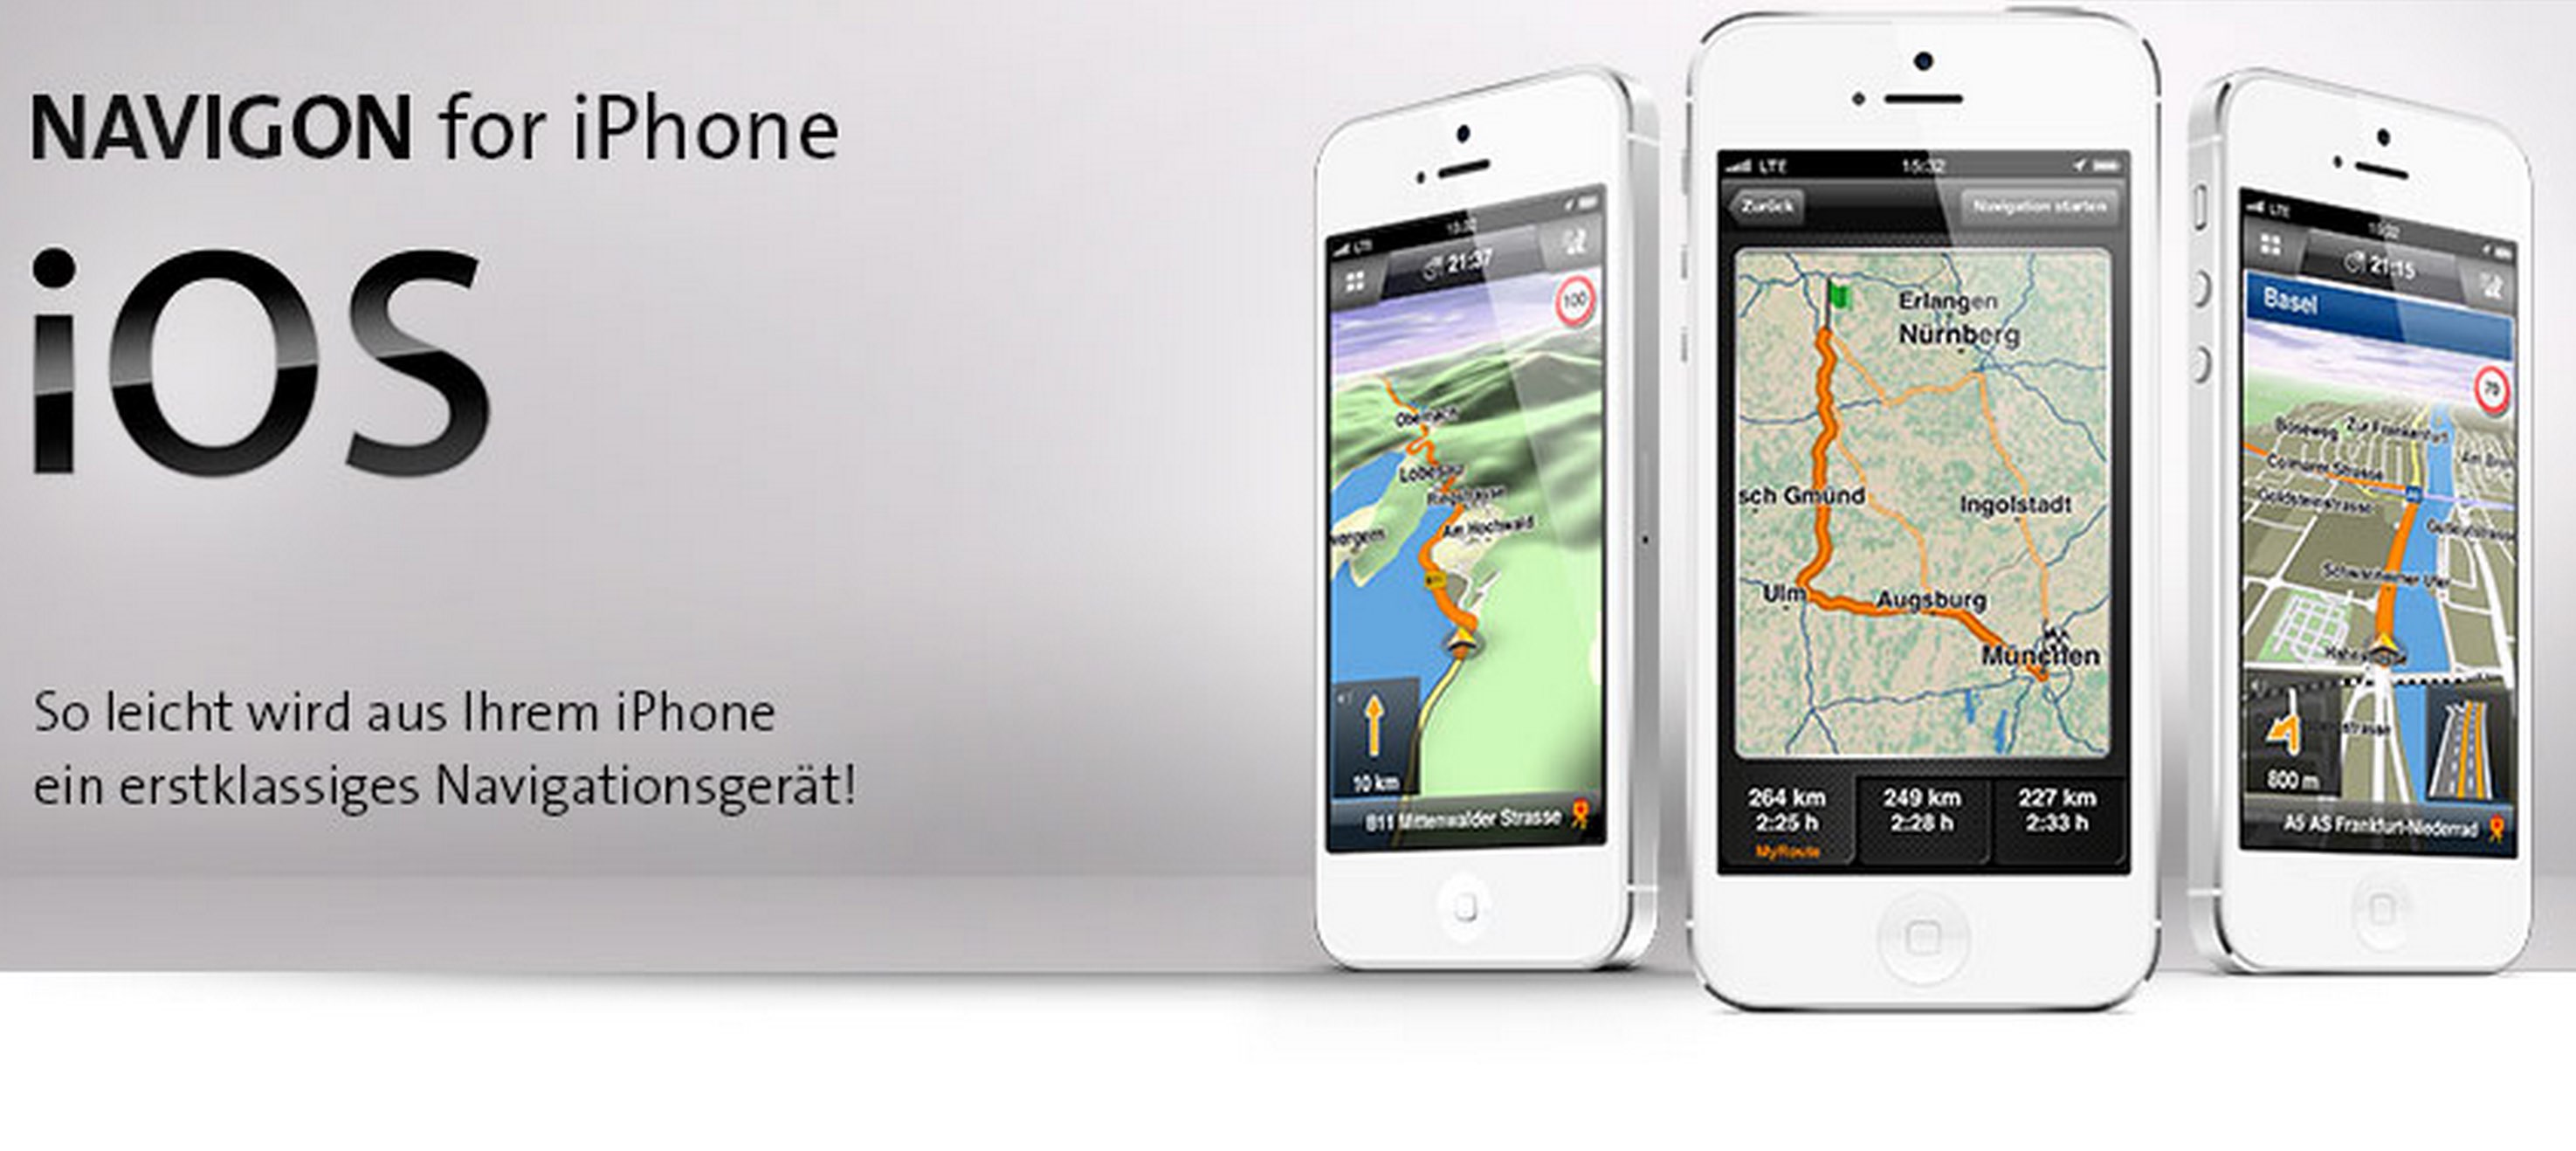 Navigon für iPhone 6 & iPhone 6 Plus angepasst 4